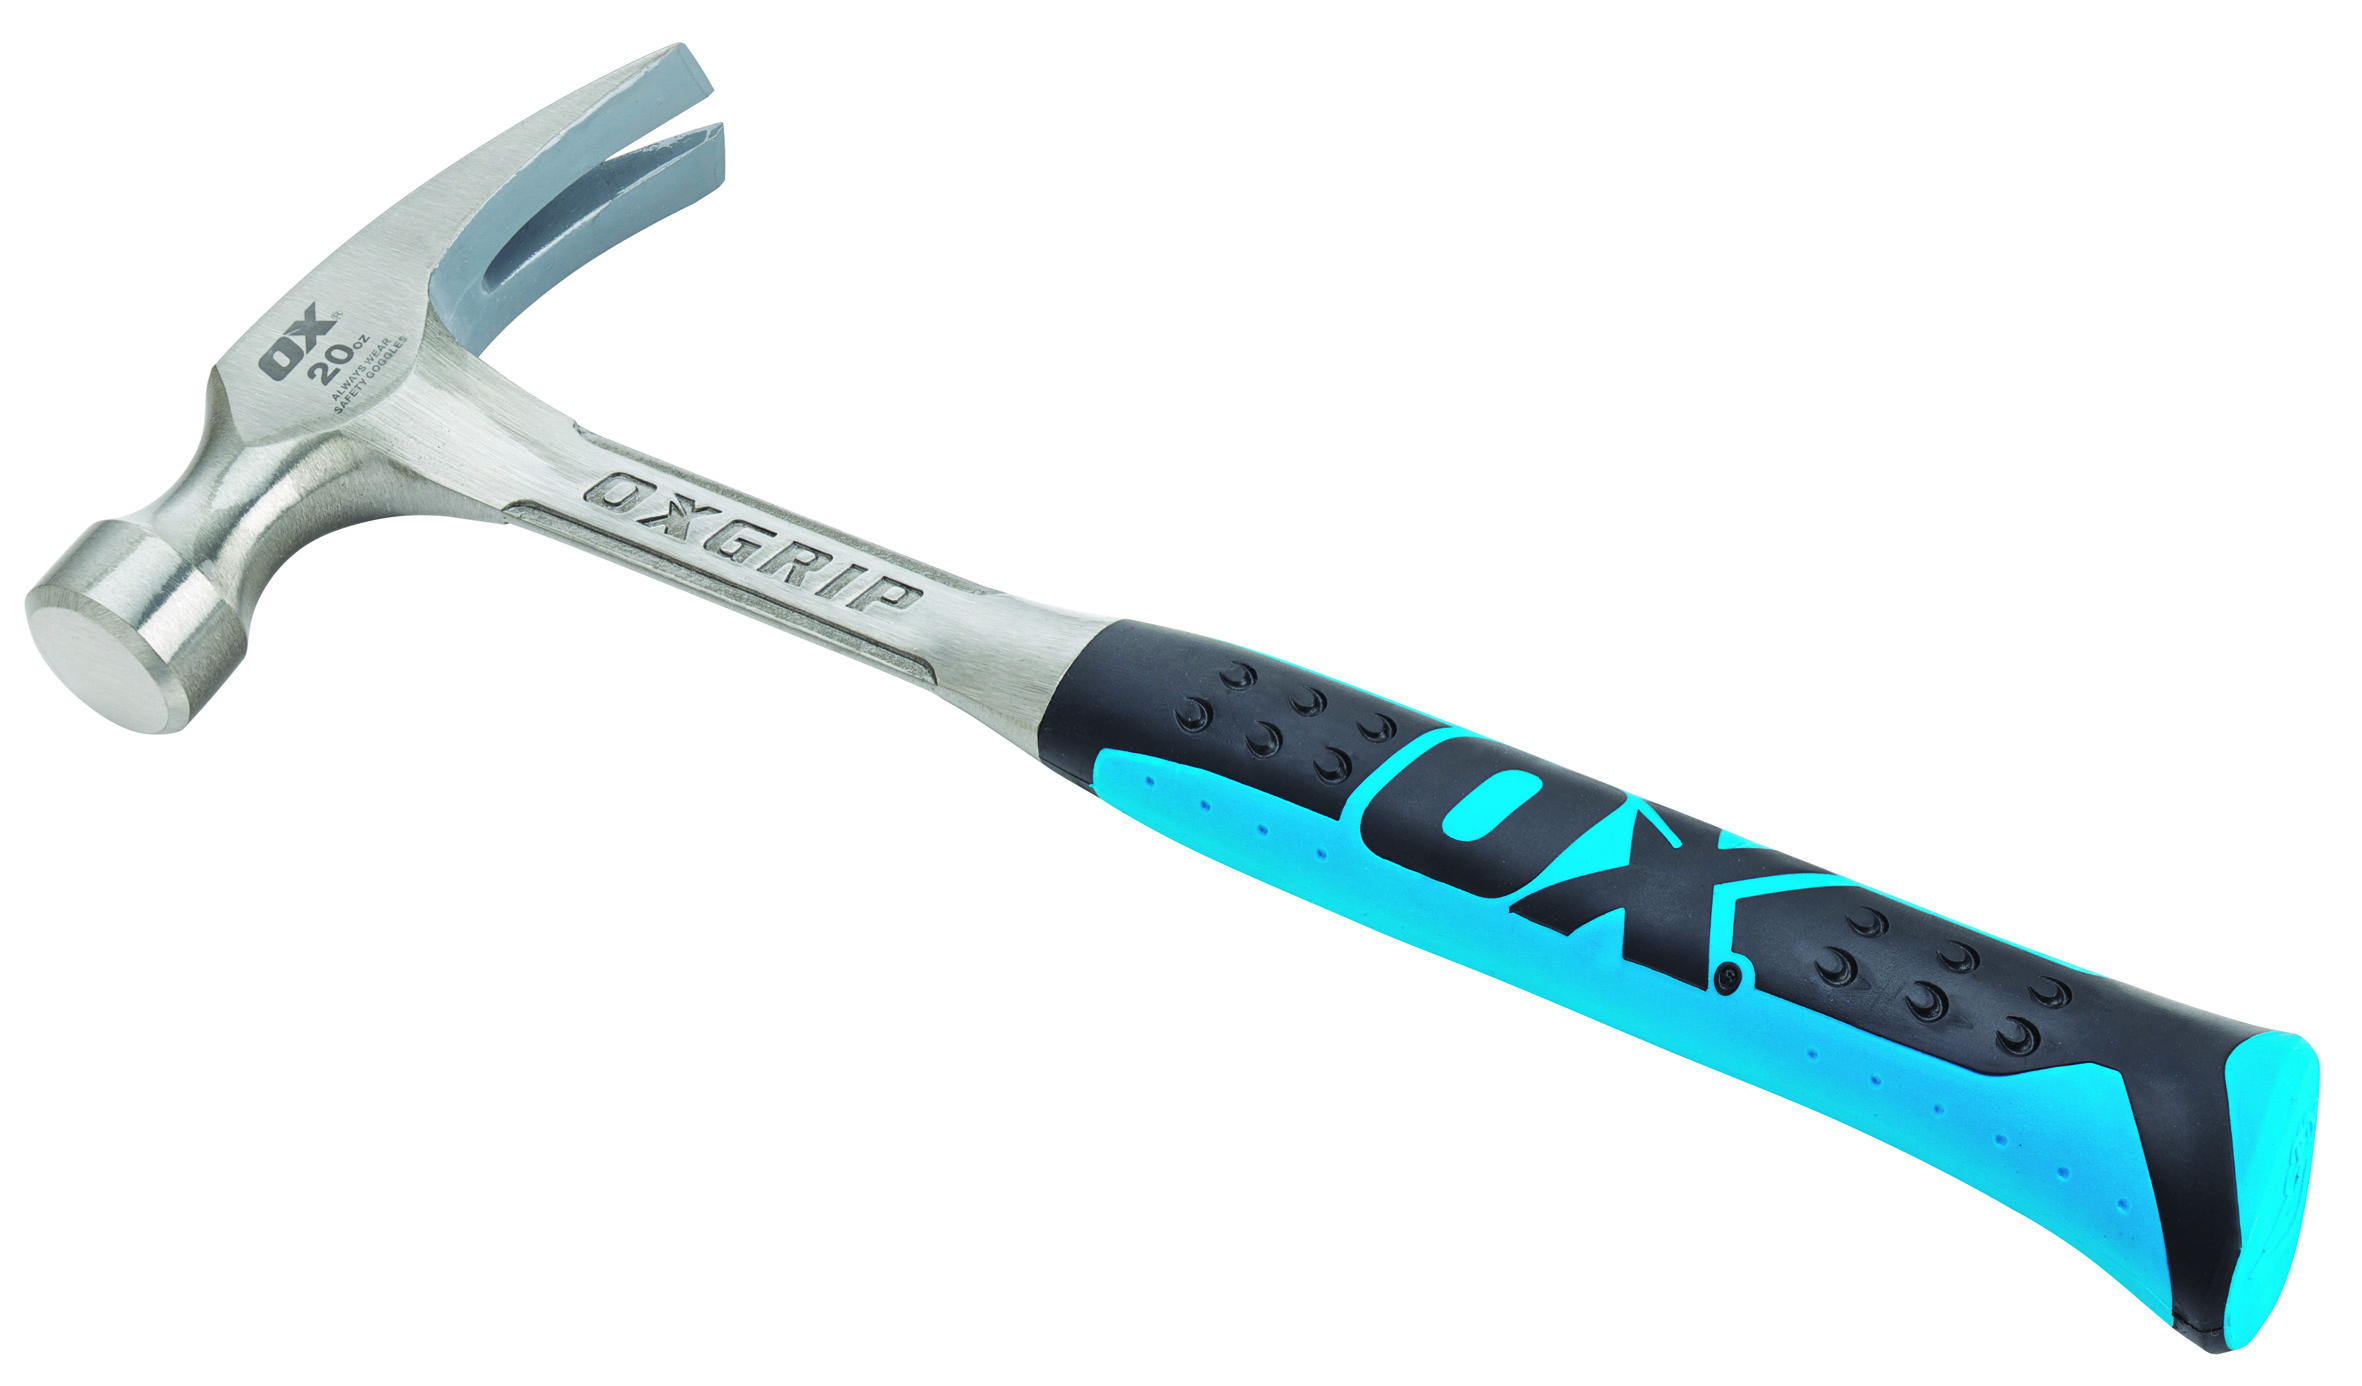 OX Pro Straight Claw Hammer - 20 oz